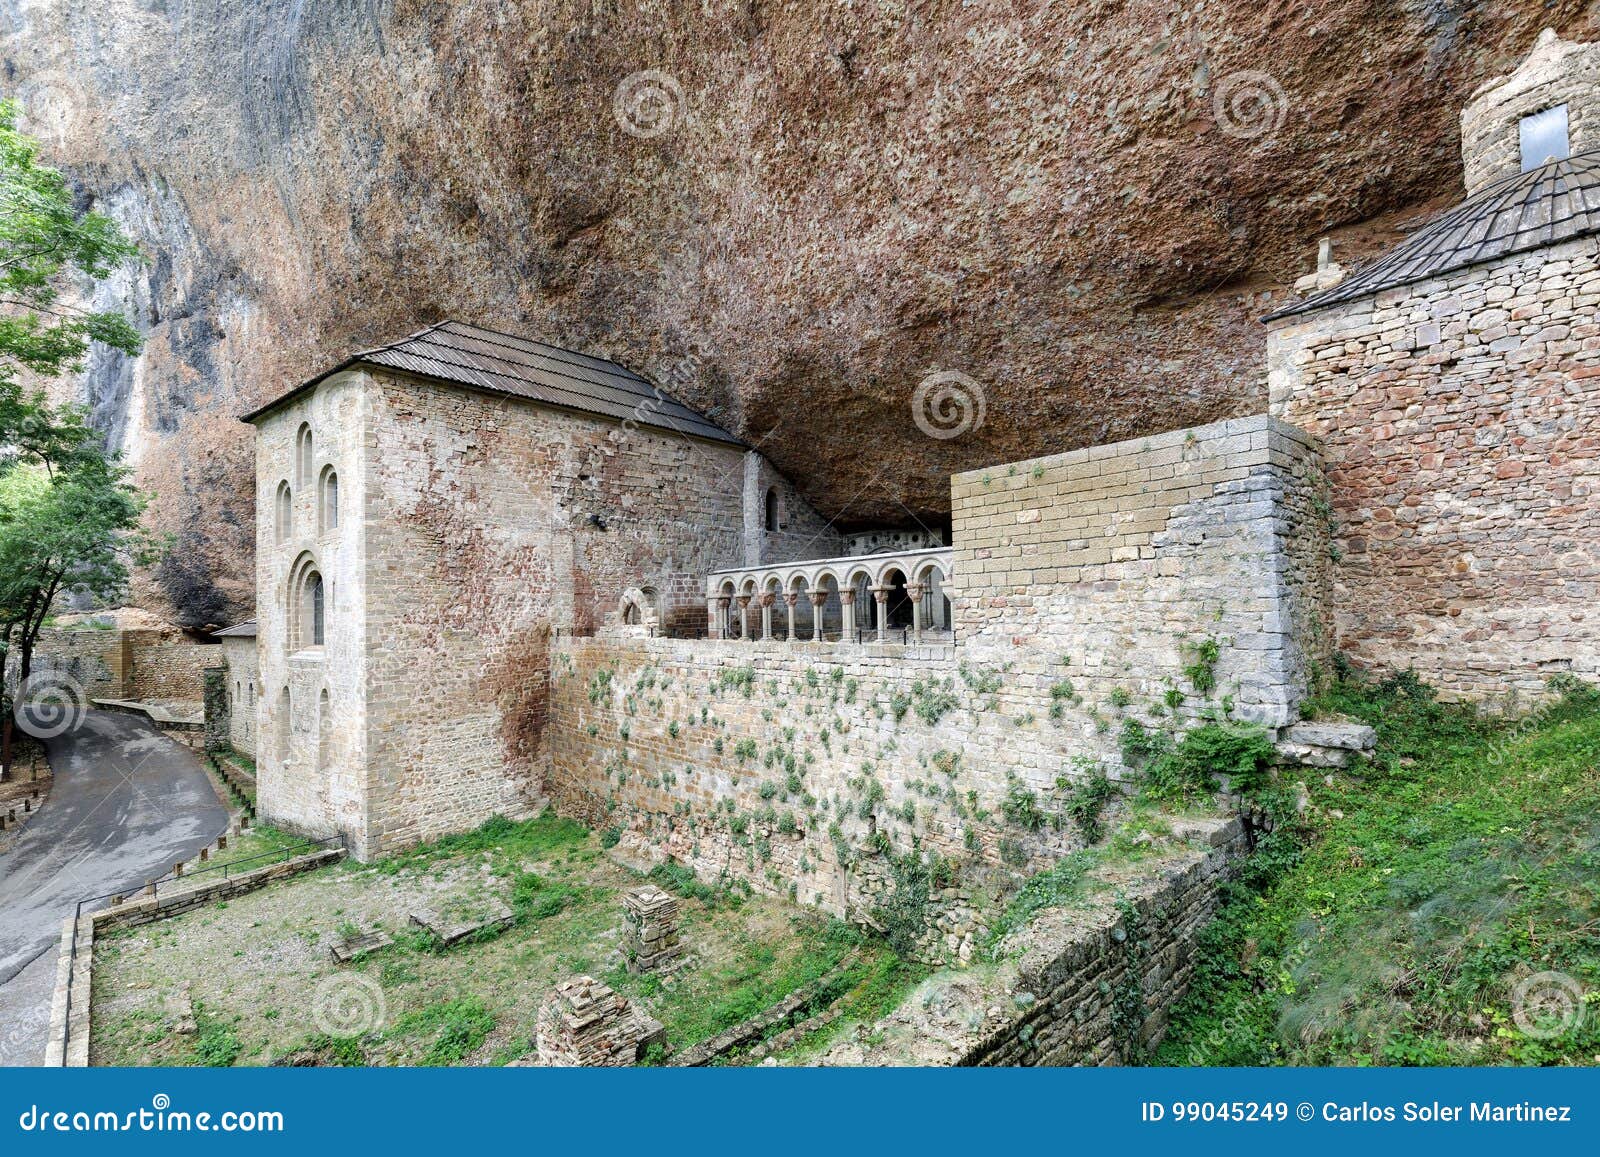 san juan de la pena romanesque monastery huesca spain